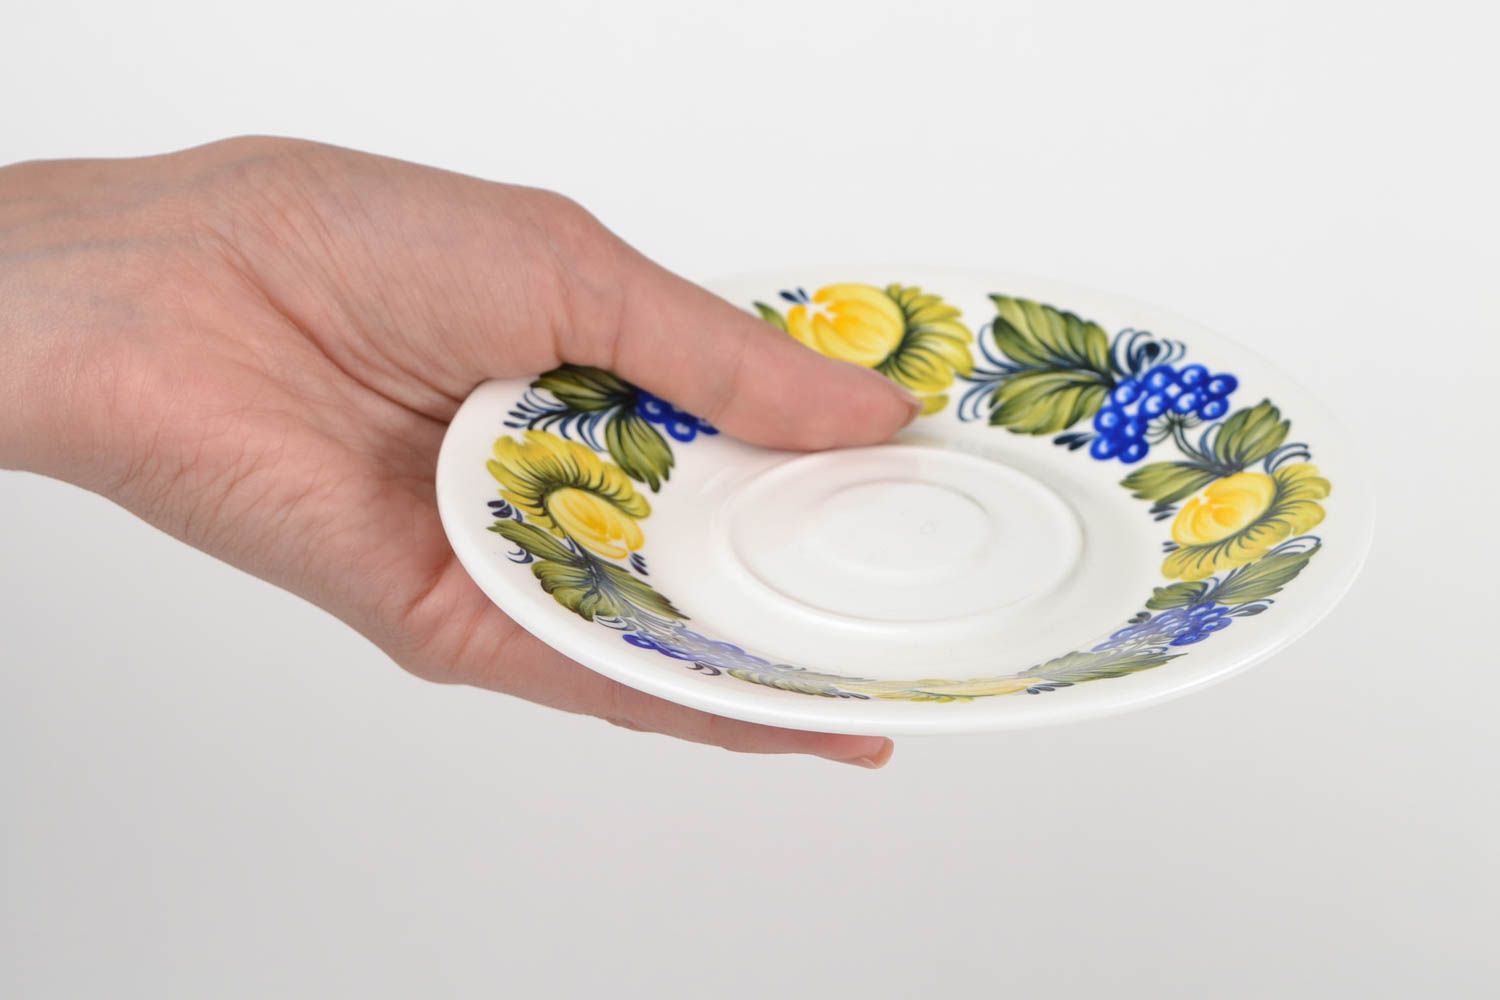 Unusual handmade porcelain saucer ceramic kitchenware table setting ideas photo 2